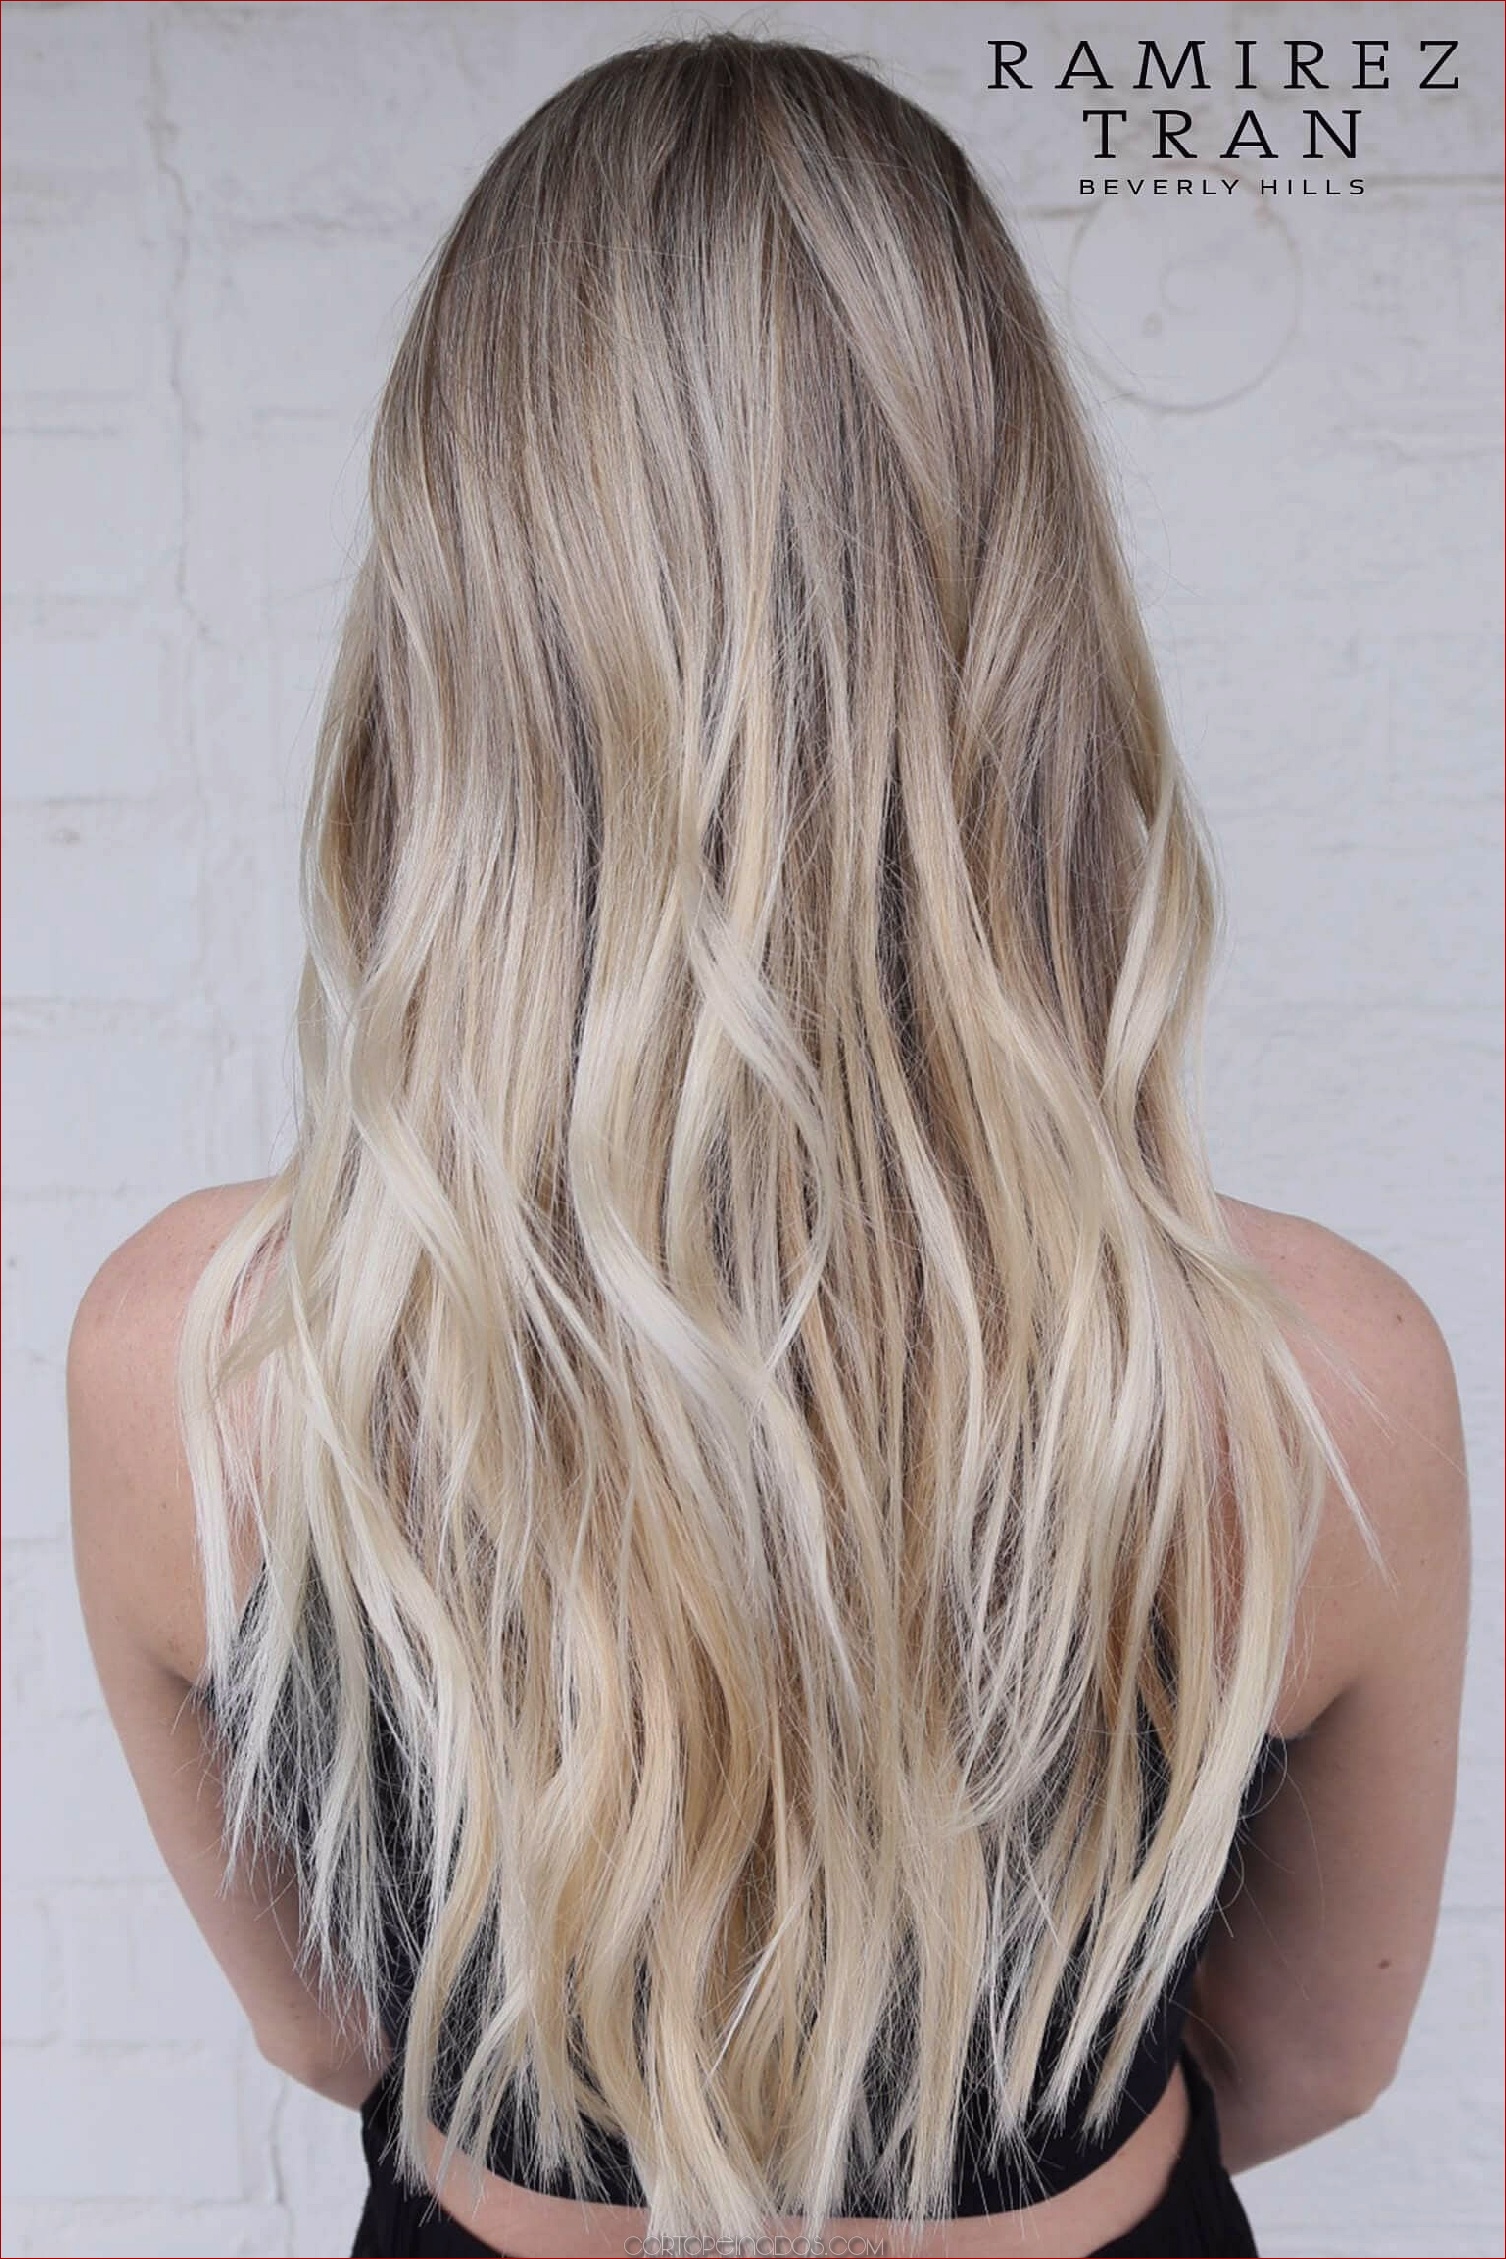 50 Bombshell Blonde Balayage Peinados que son lindos y fáciles